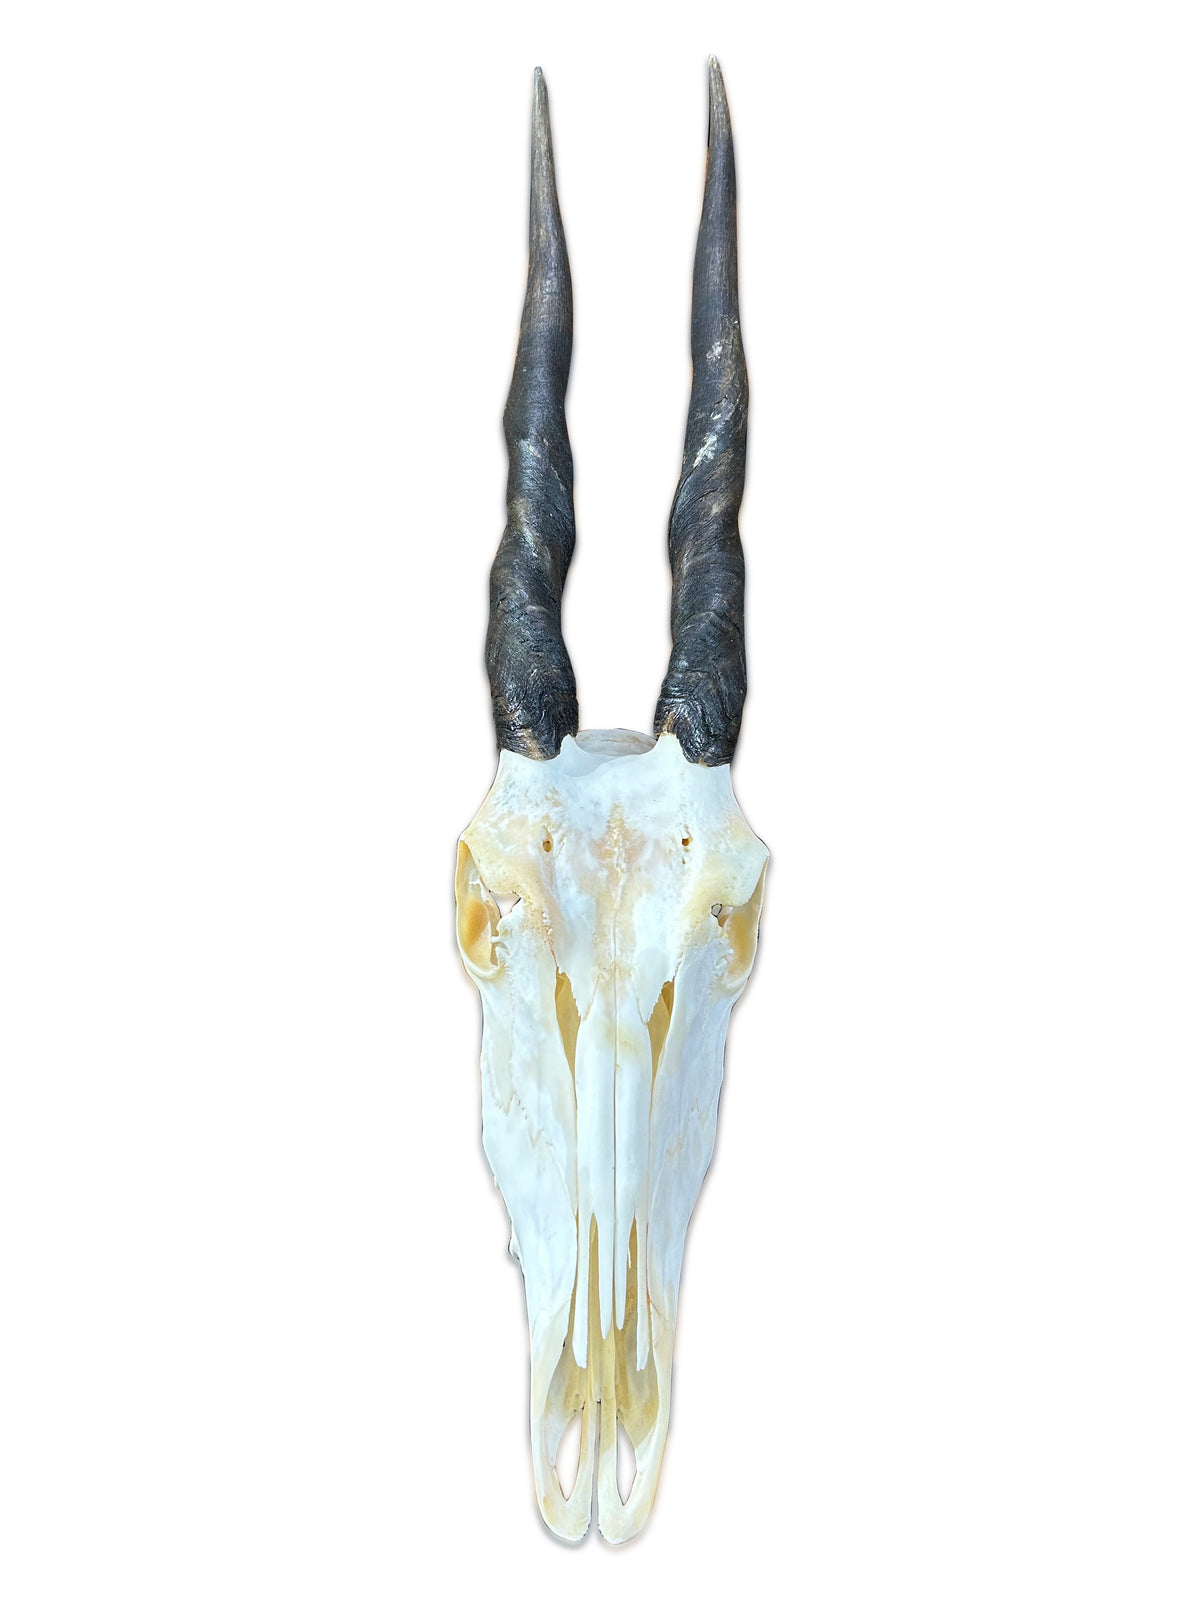 Eland Skull - Real African Antelope Horns and skull- African Eland Cranium - 25" Horns